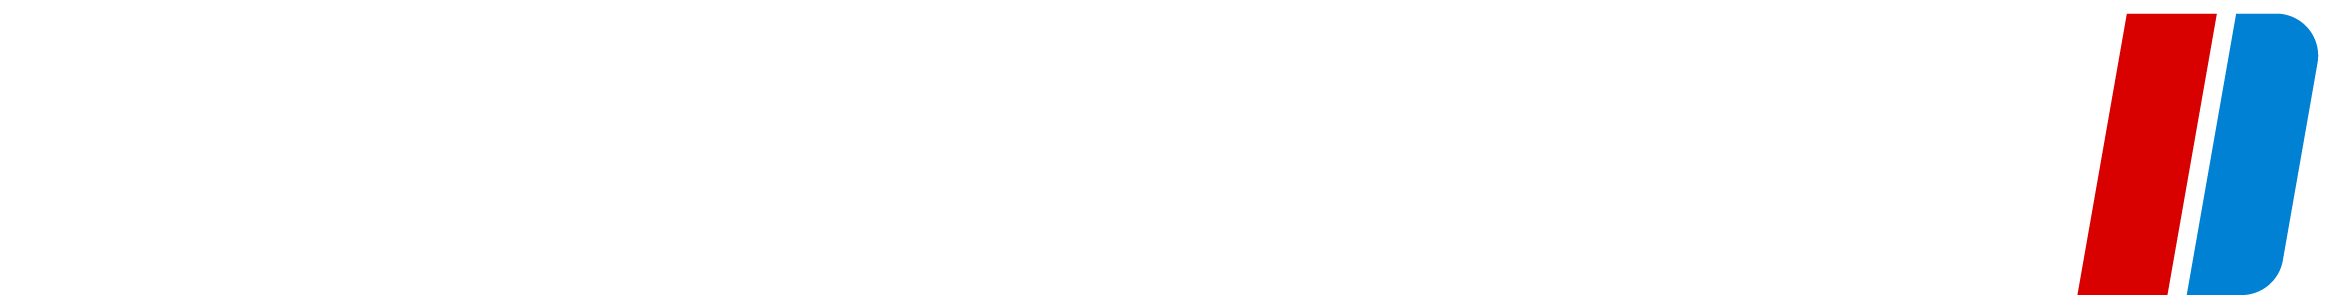 RSTRONIC Logo